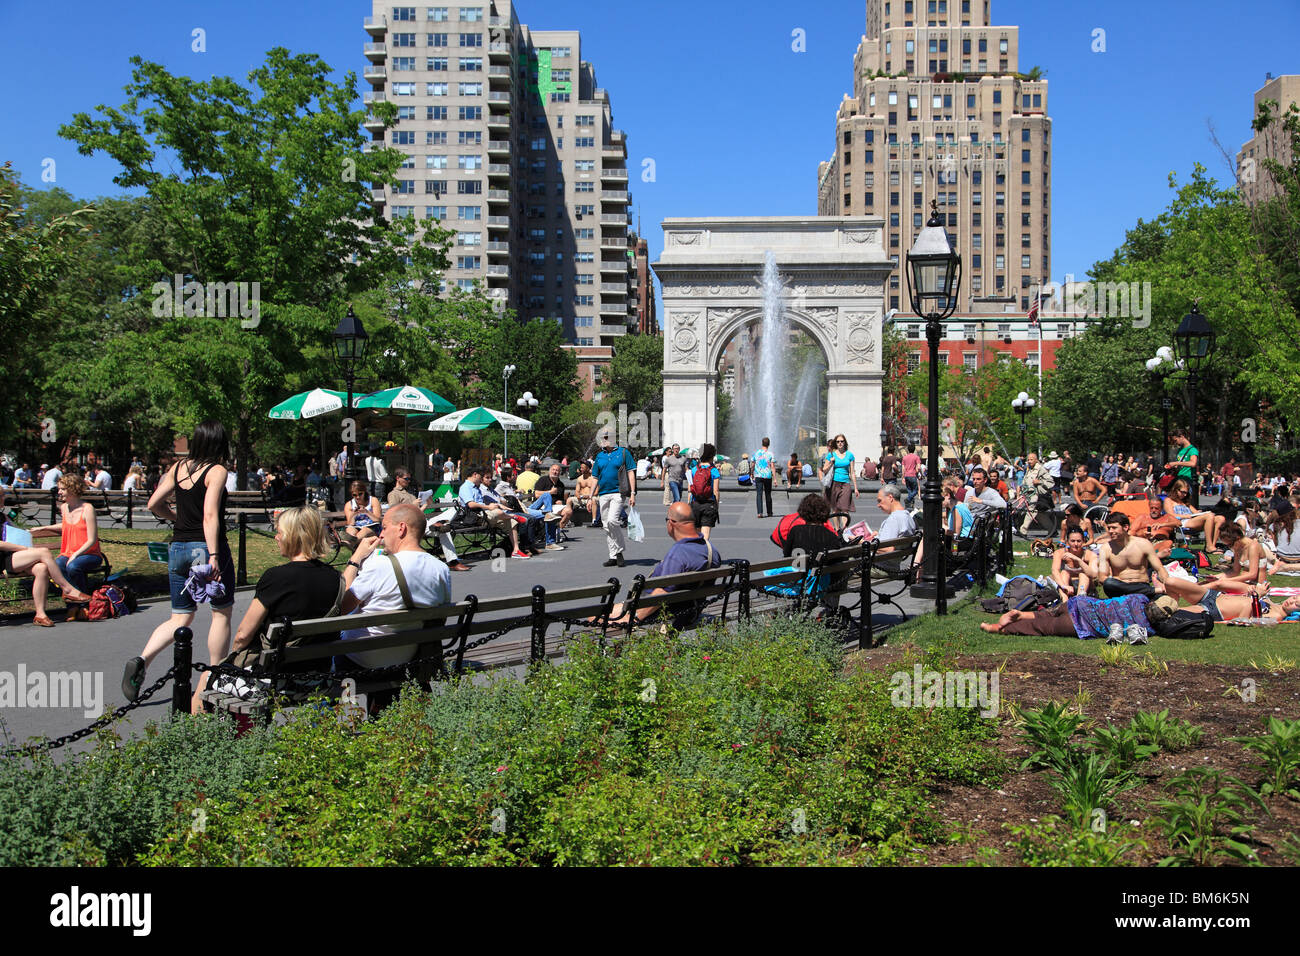 Washington Square Park, Washington Square Arch, Greenwich Village, West Village, Manhattan, New York City, USA Stock Photo